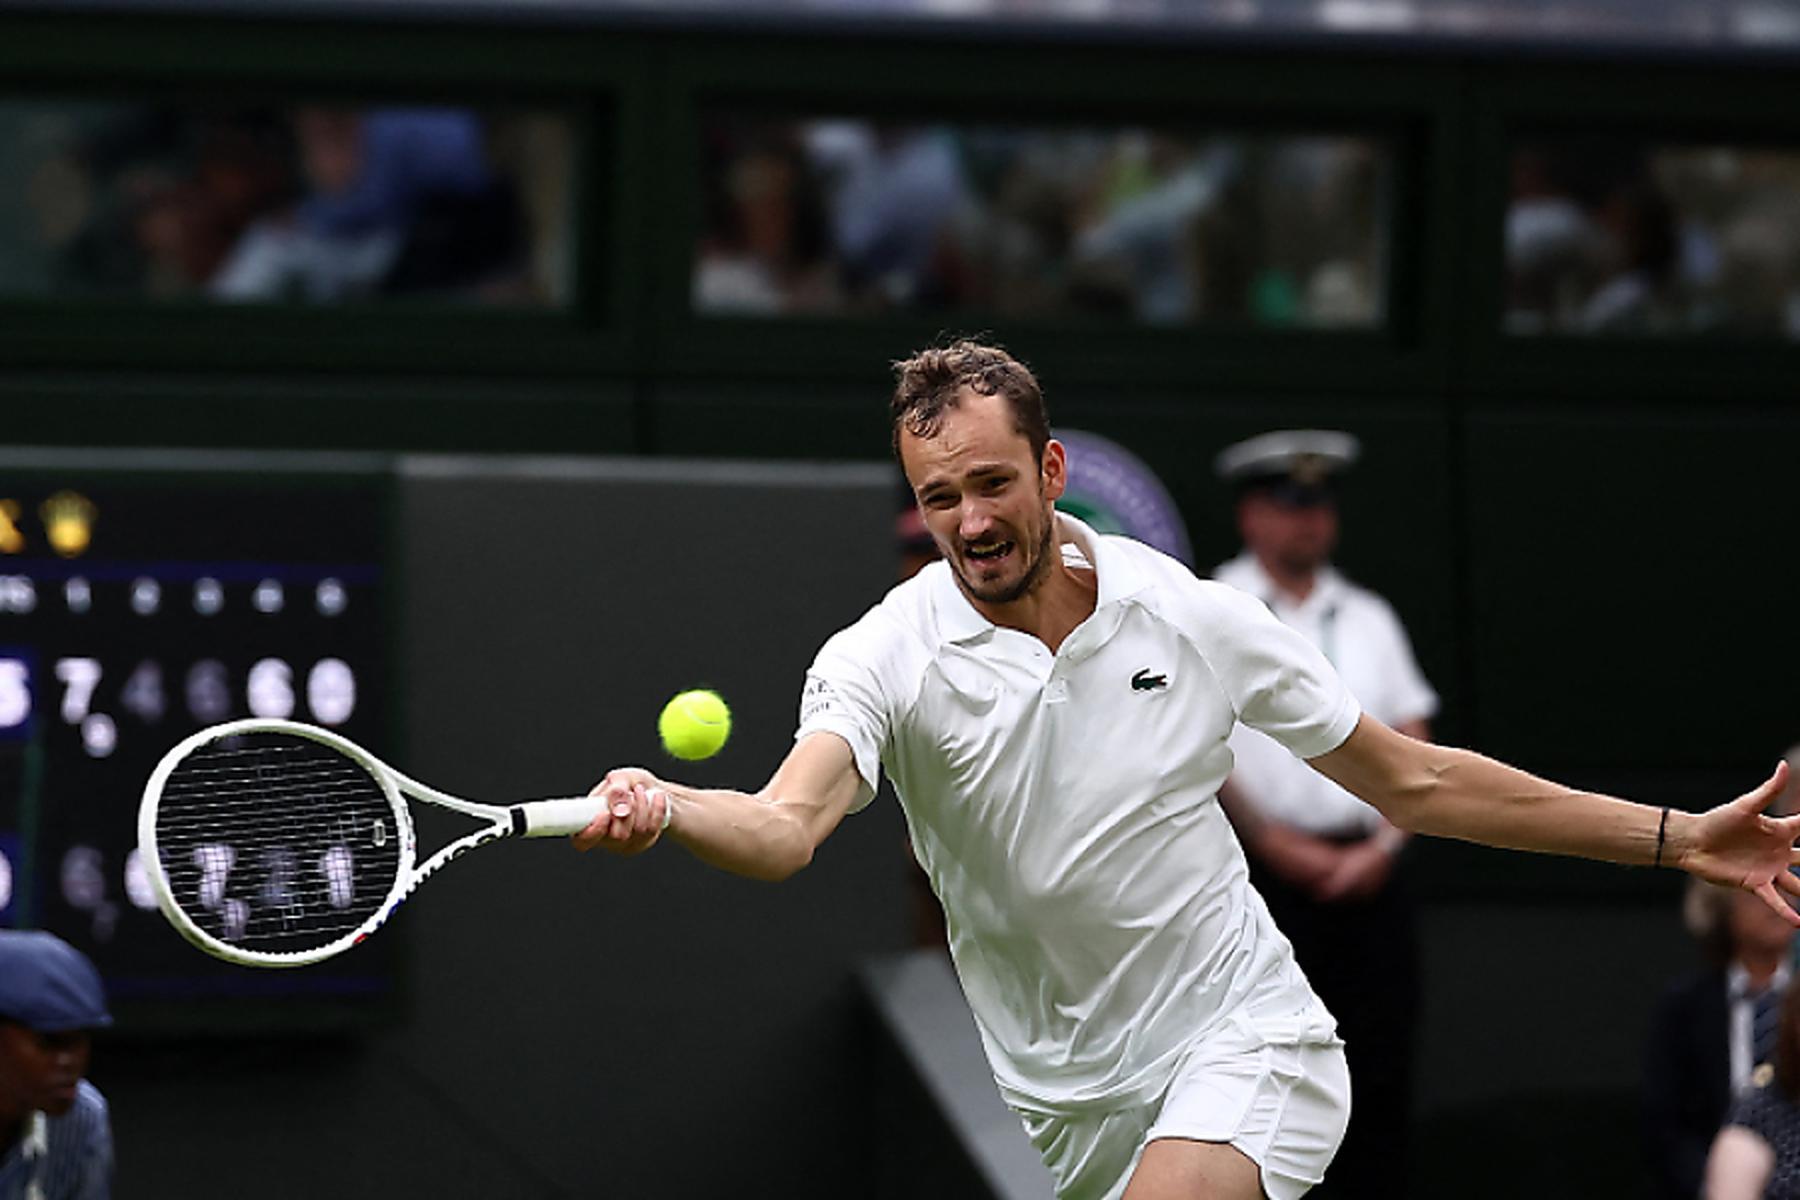 London: Medwedew schlug in Wimbledon Sinner, nun wartet Alcaraz